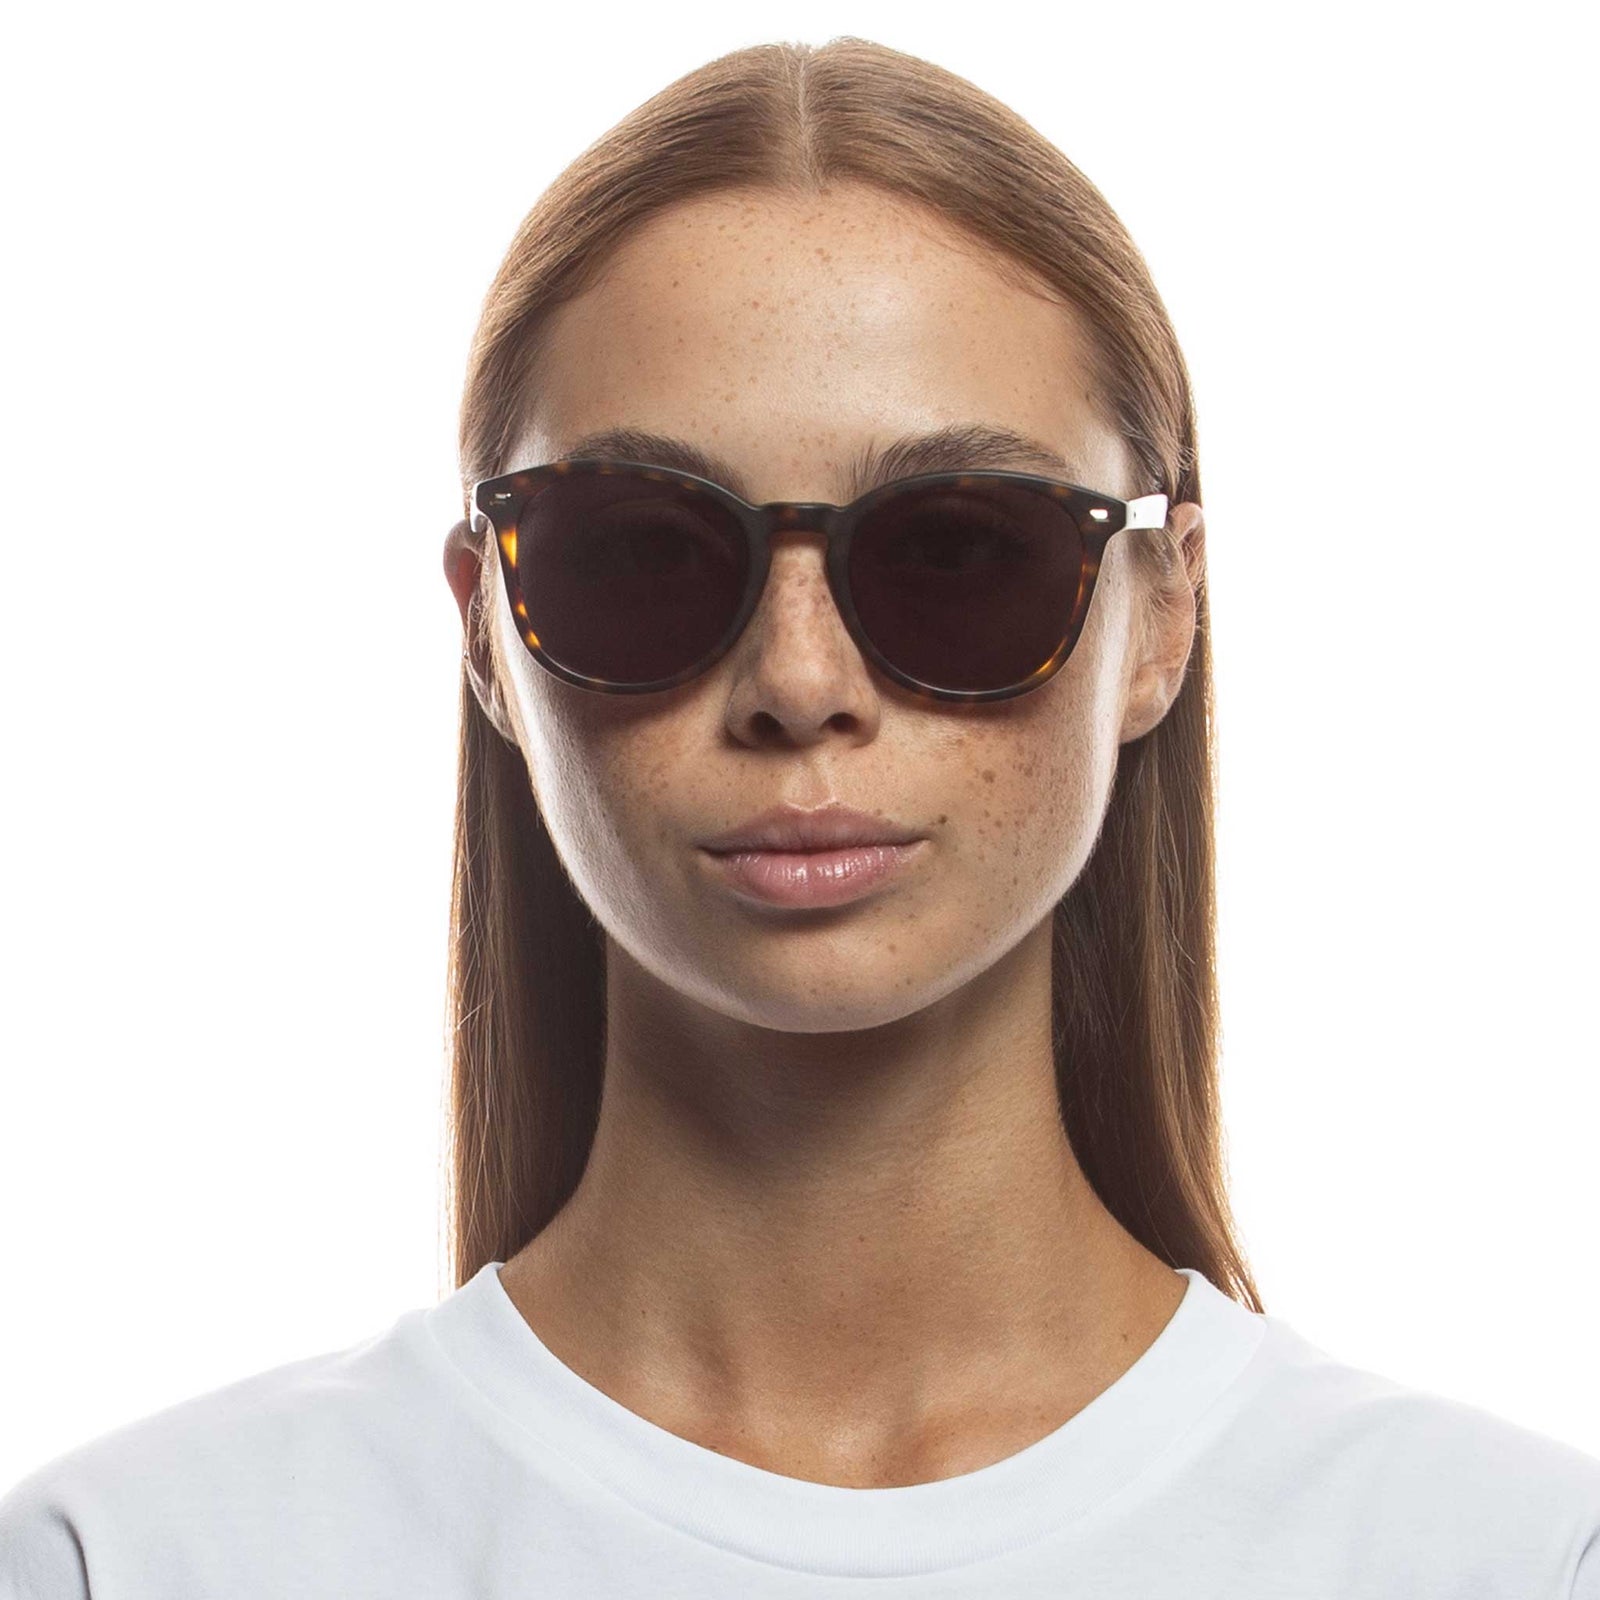 Le Specs Bandwagon 51mm Sunglasses in Matte Stone | Le specs, Sunglasses,  Bandwagon